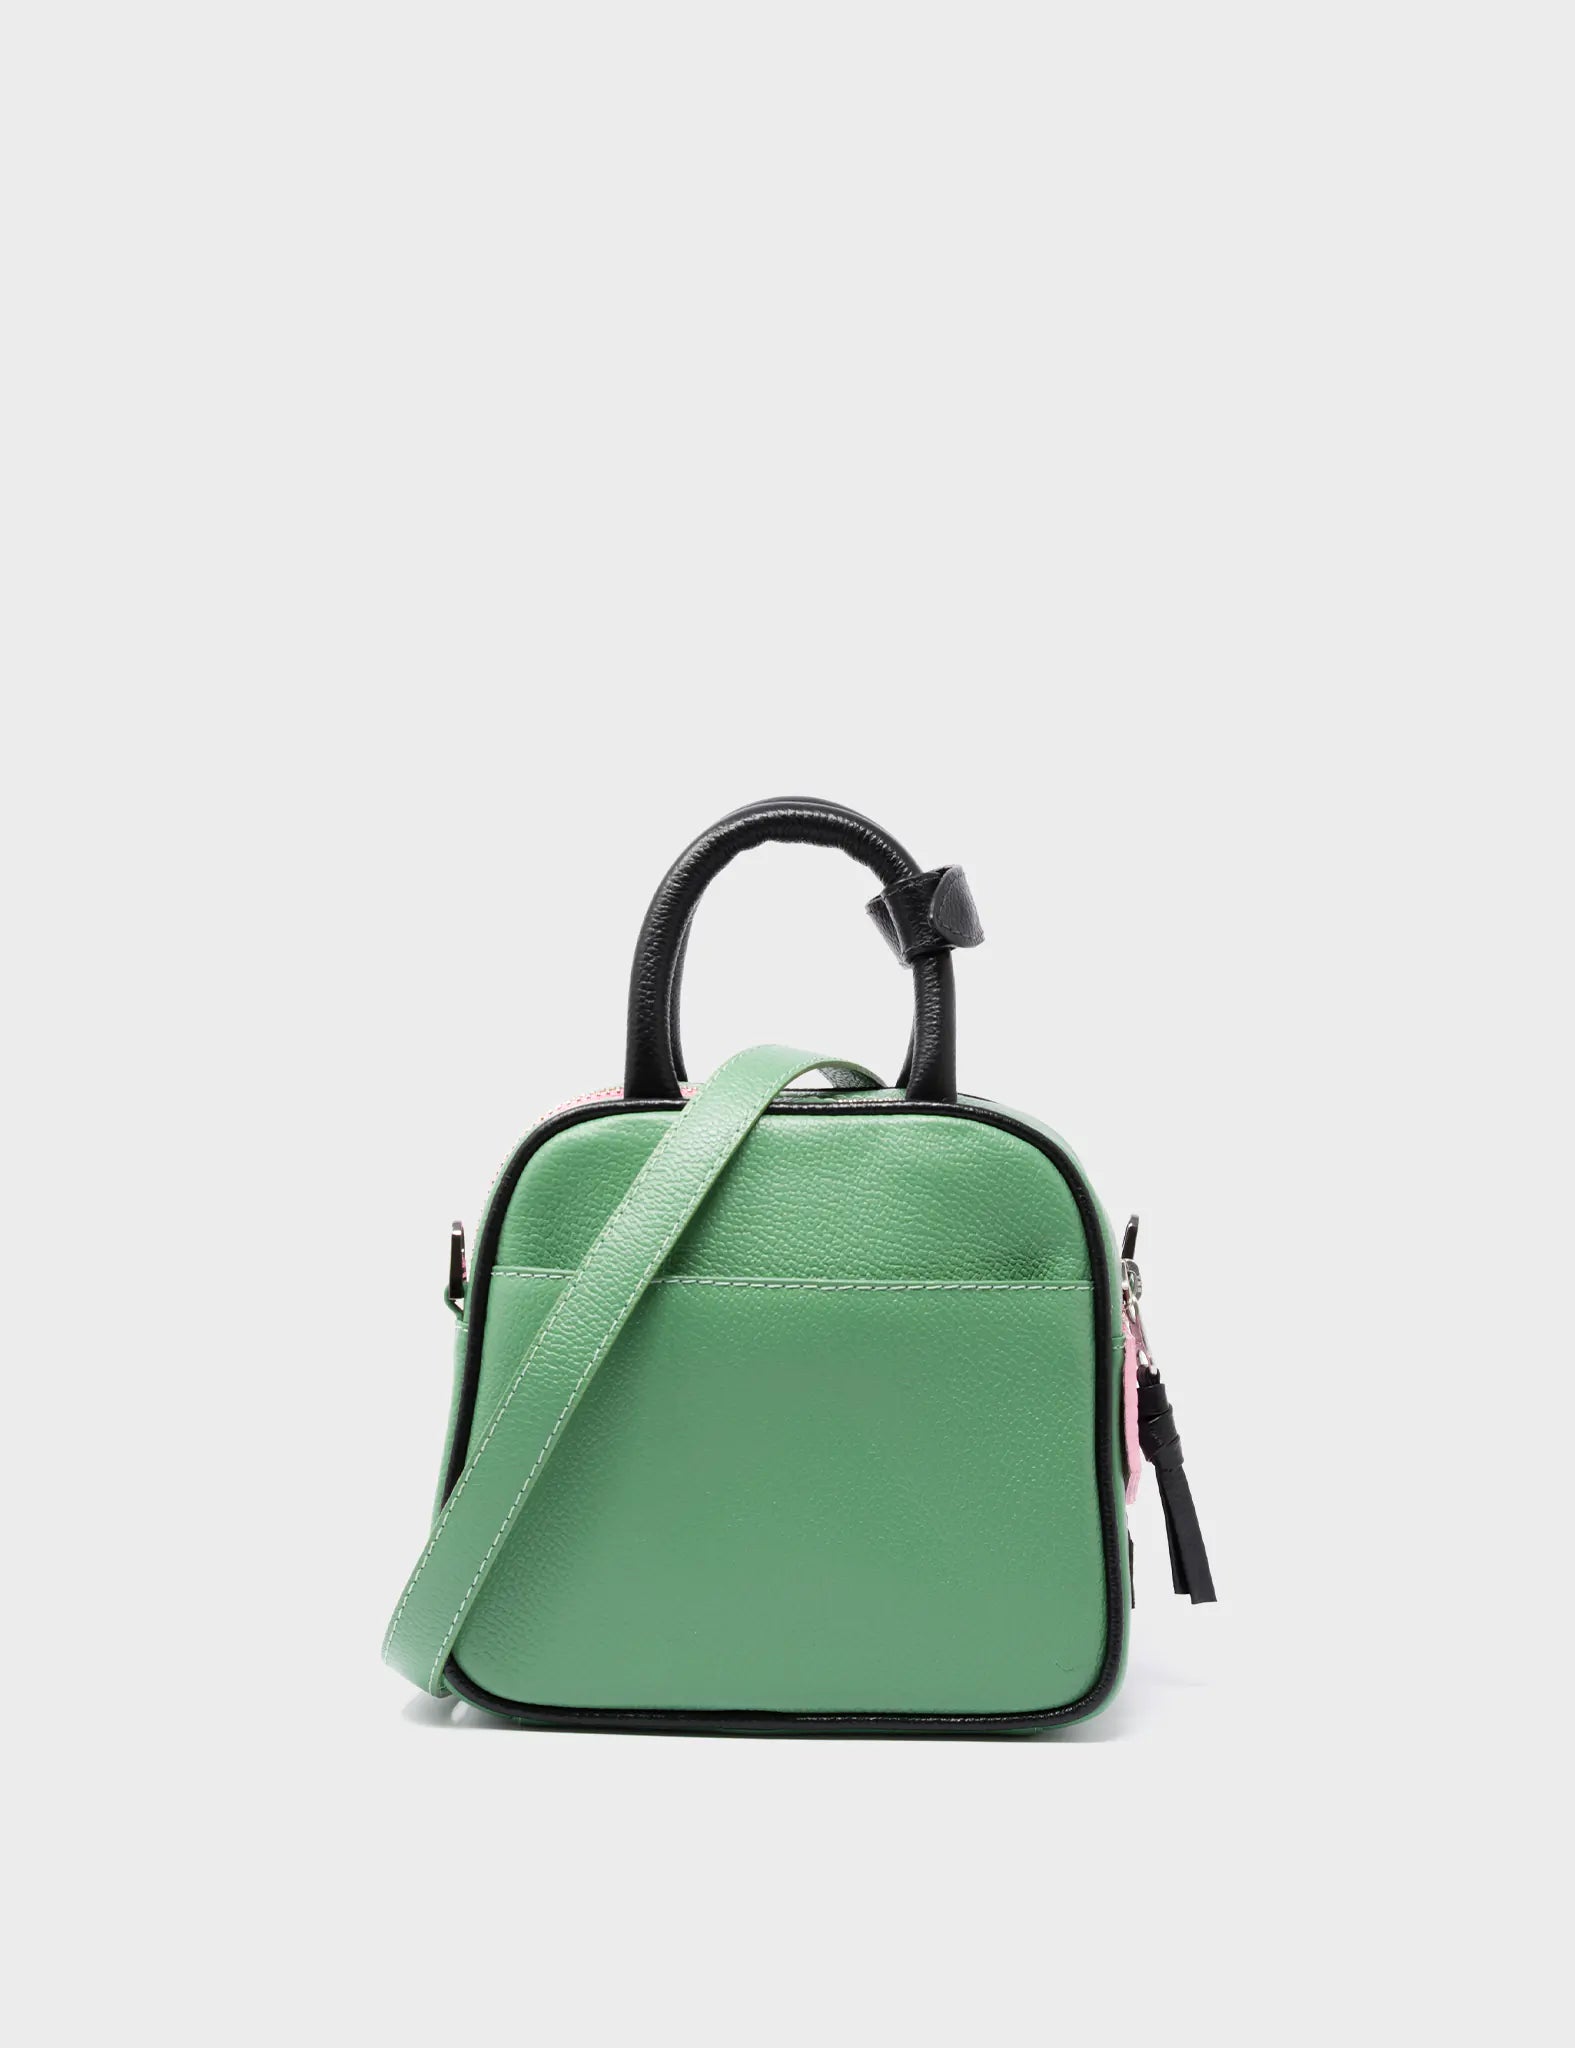 Marino Mini Crossbody Green Leather Bag - El Tropico Print & Embroidery Design - Back